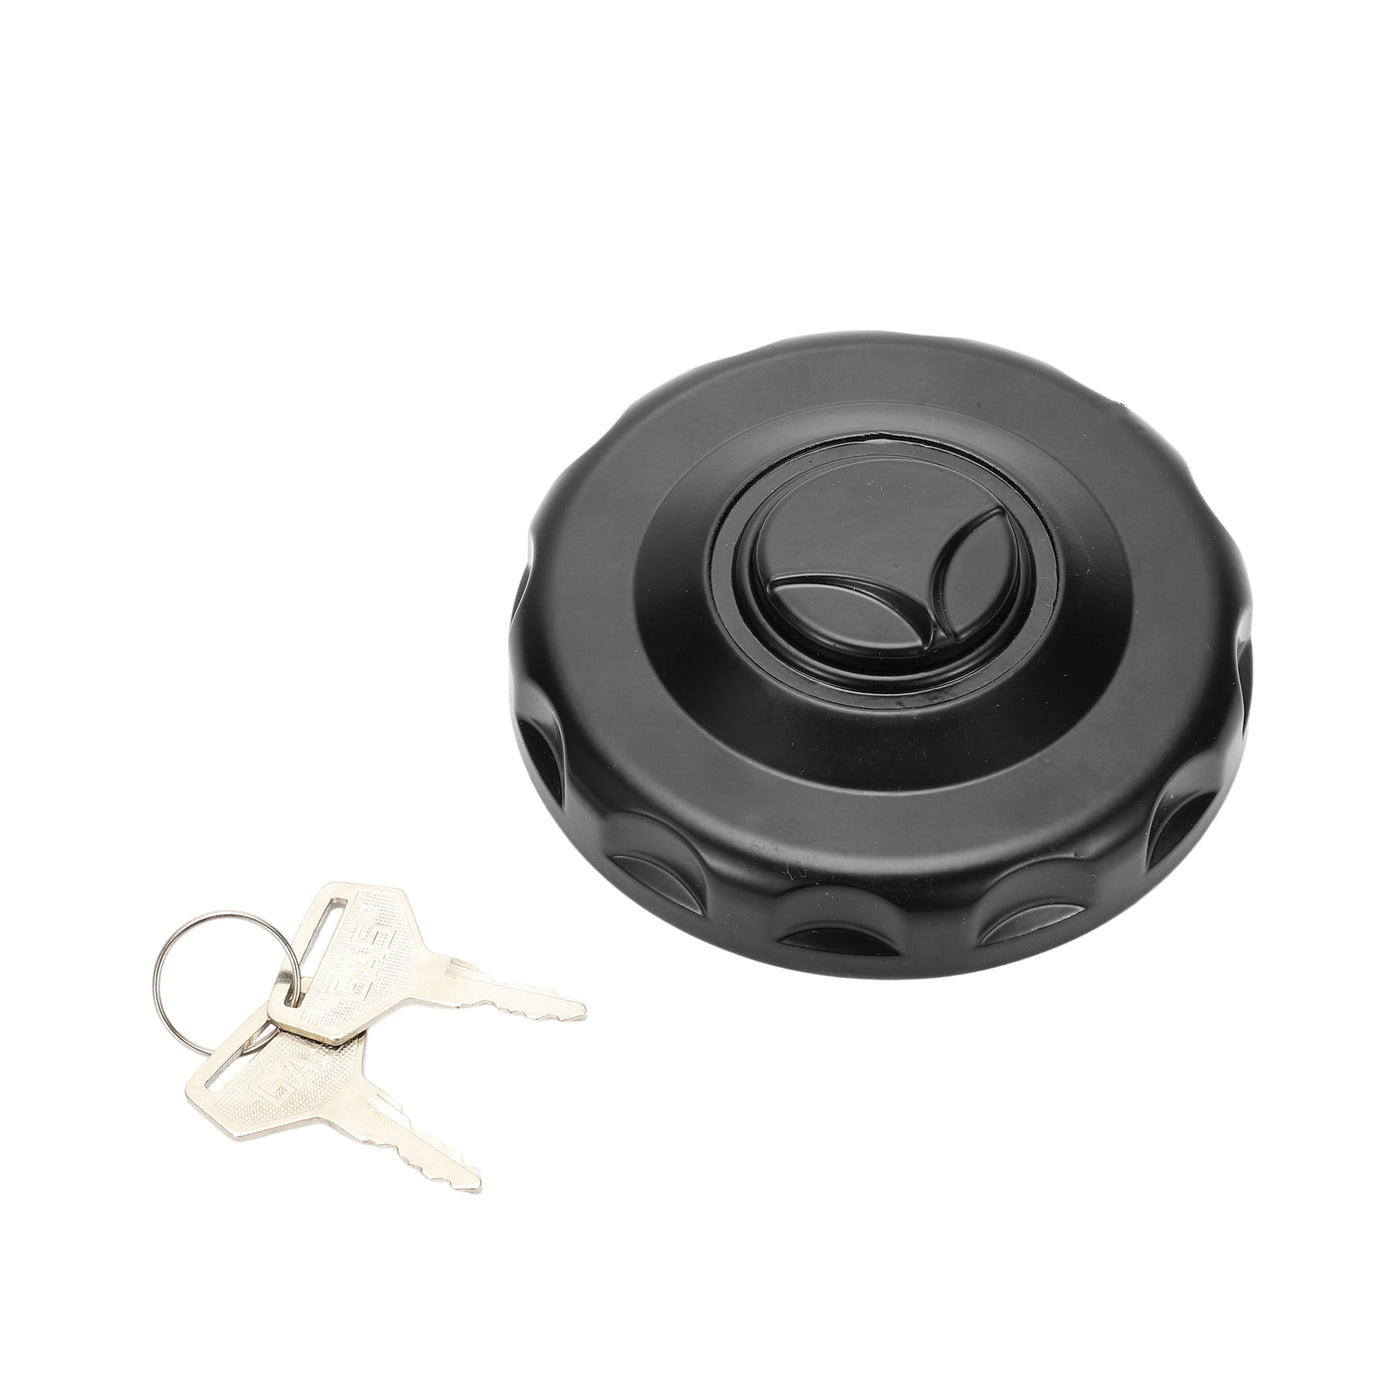 ACROPIX Plastic Locking Gas Cap Lock Fuel Tank Cap Black Fit for Mercedes Benz with Keys No.0004700305 - Pack of 3